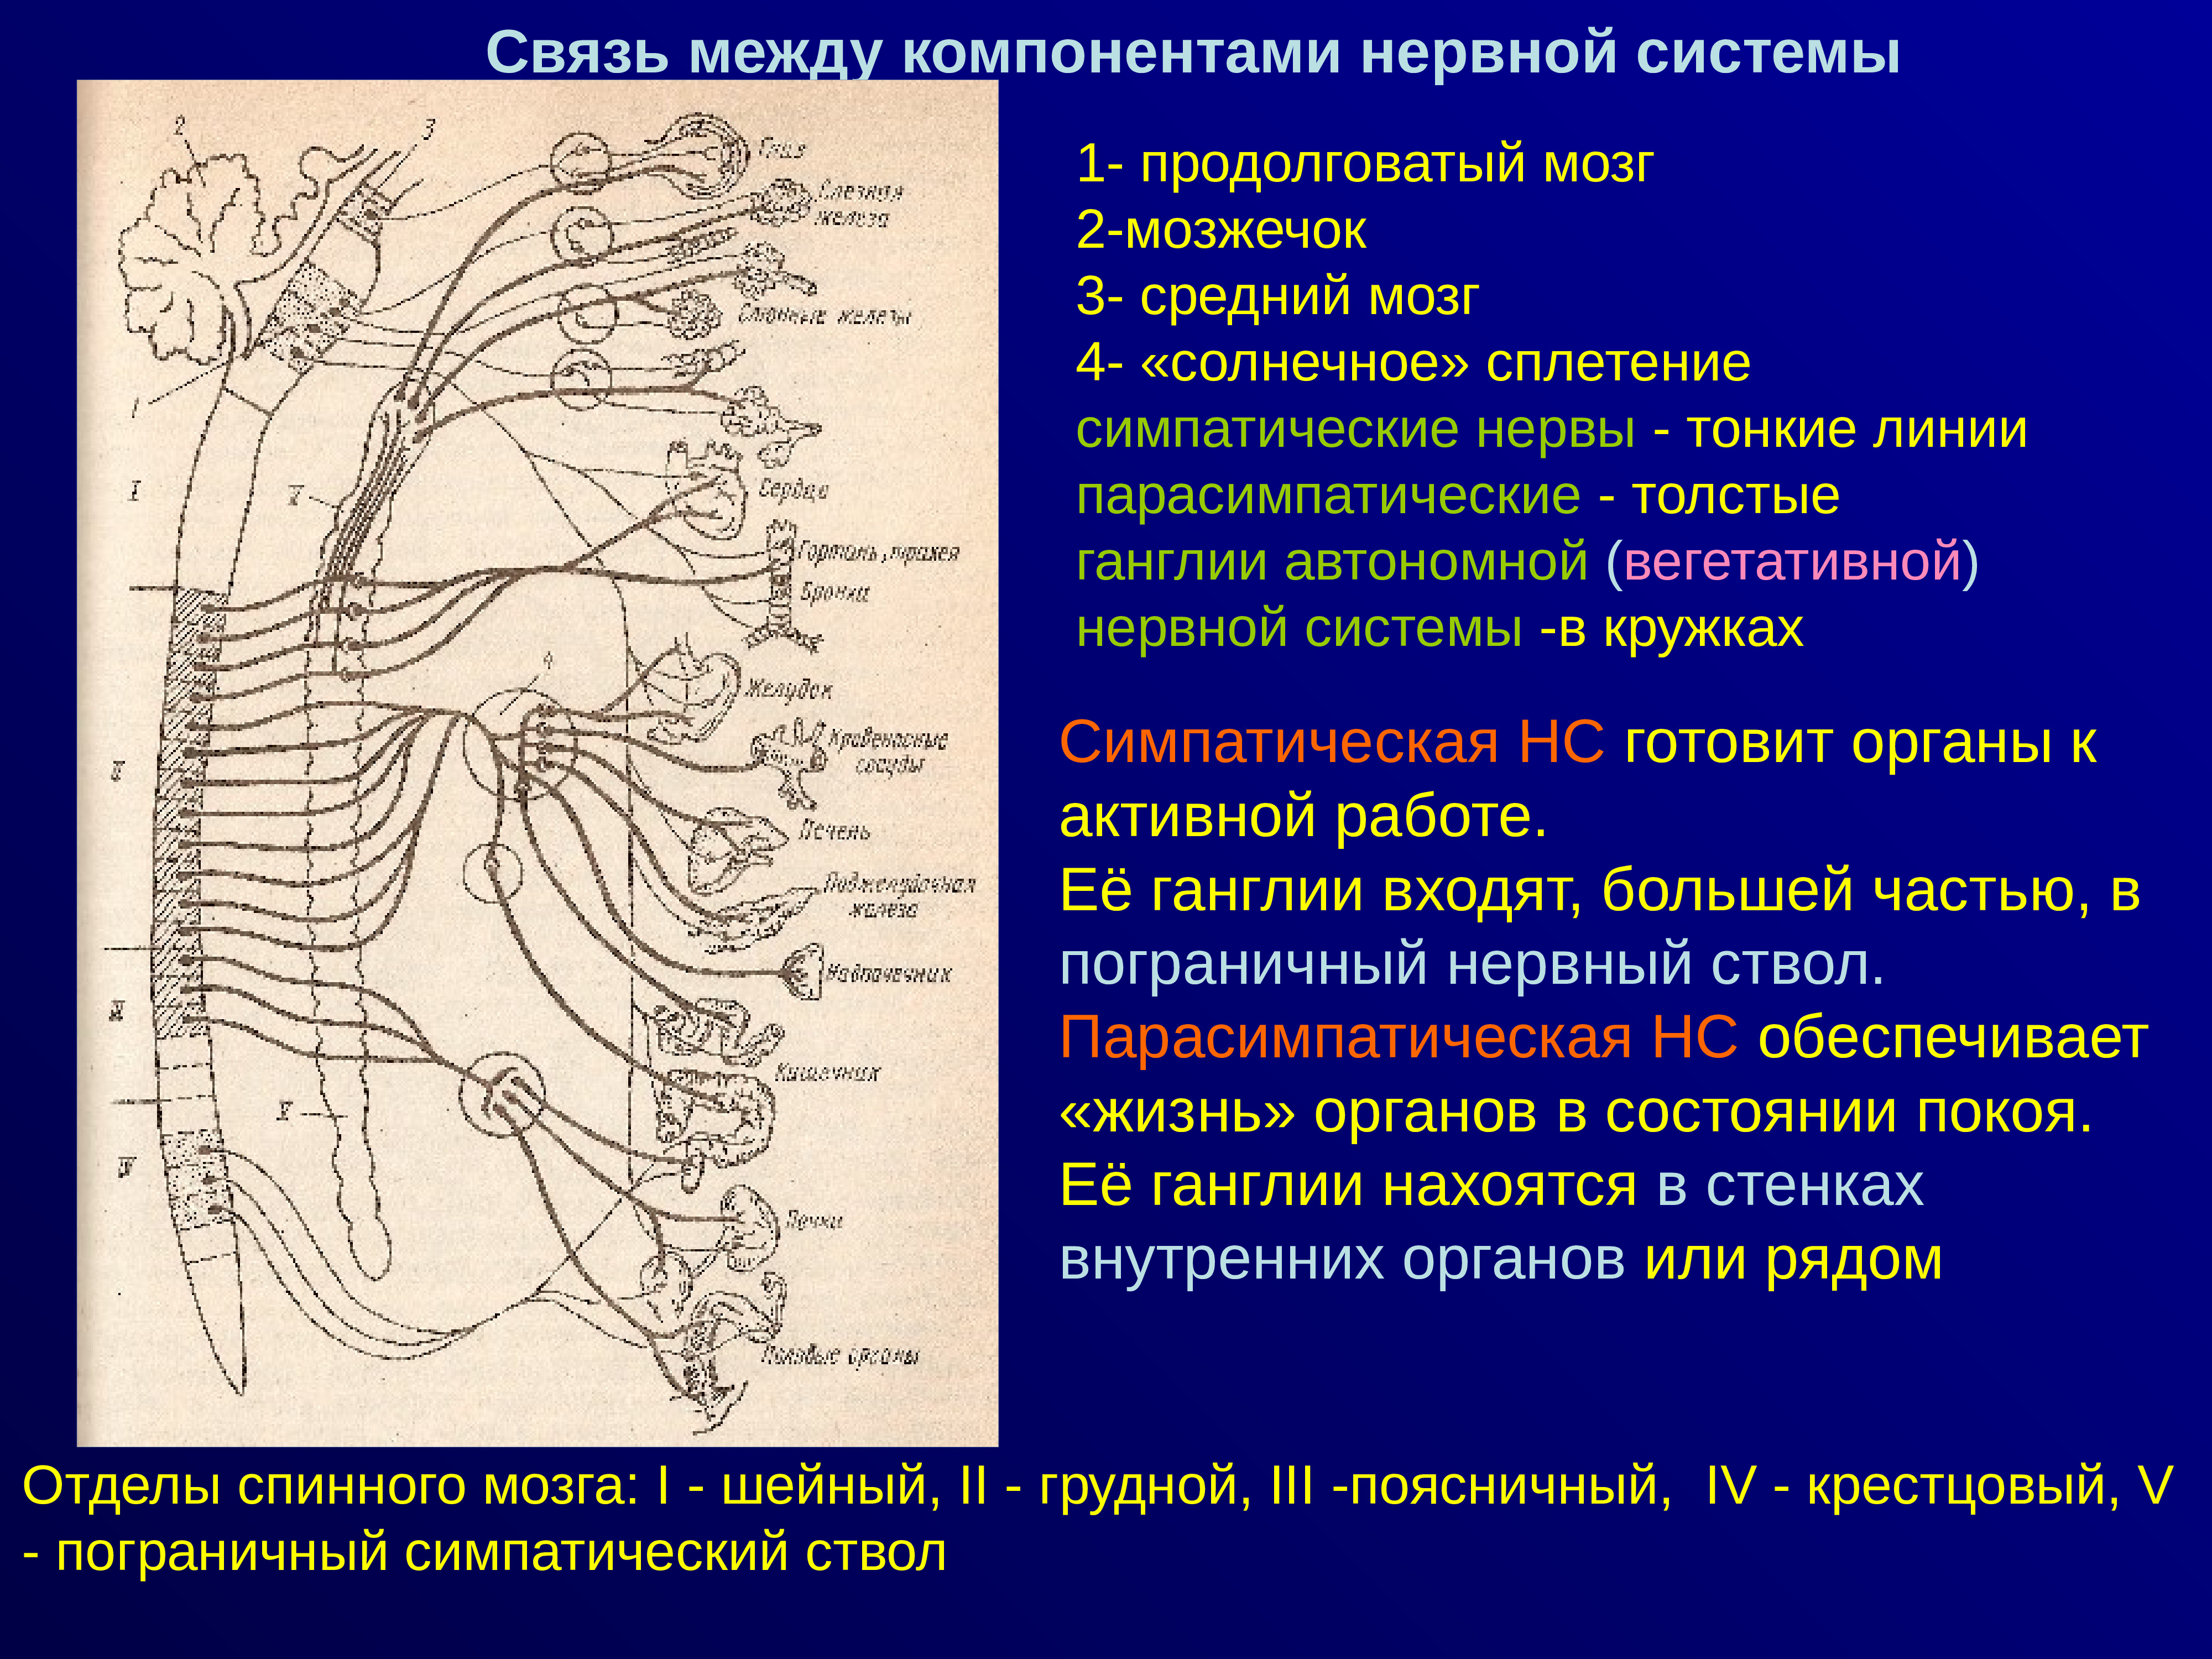 Работа симпатического нерва. Симпатическая и парасимпатическая нервная система. Симпатическая нервная система. Вегетативная нервная система человека. Парасимпатическая нервная система.